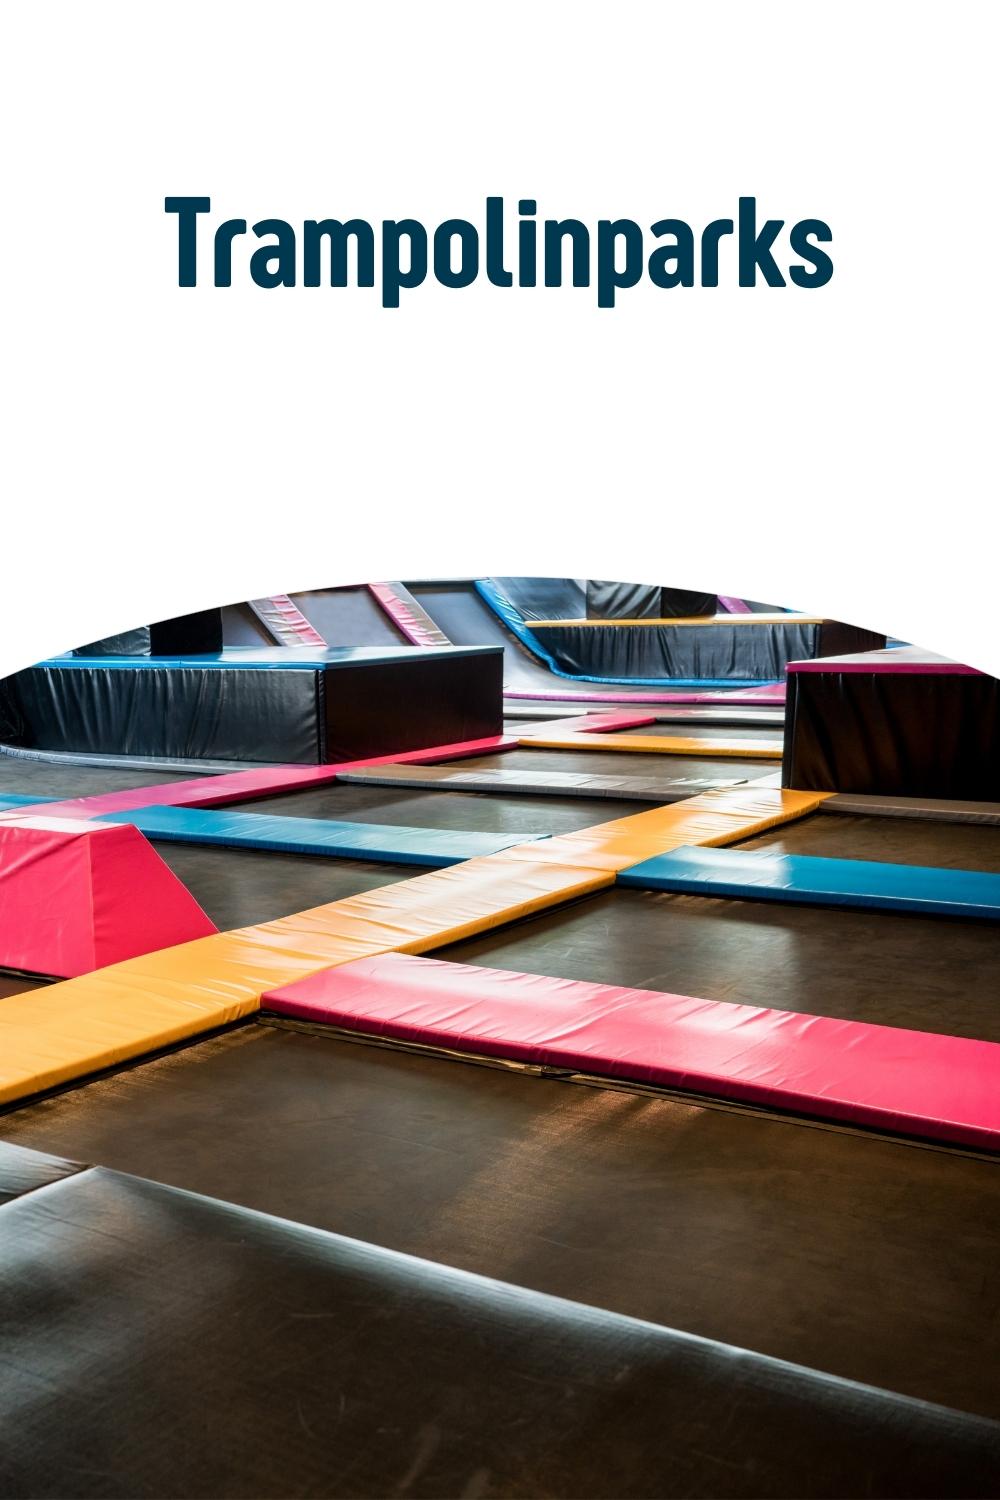 Trampolinparks